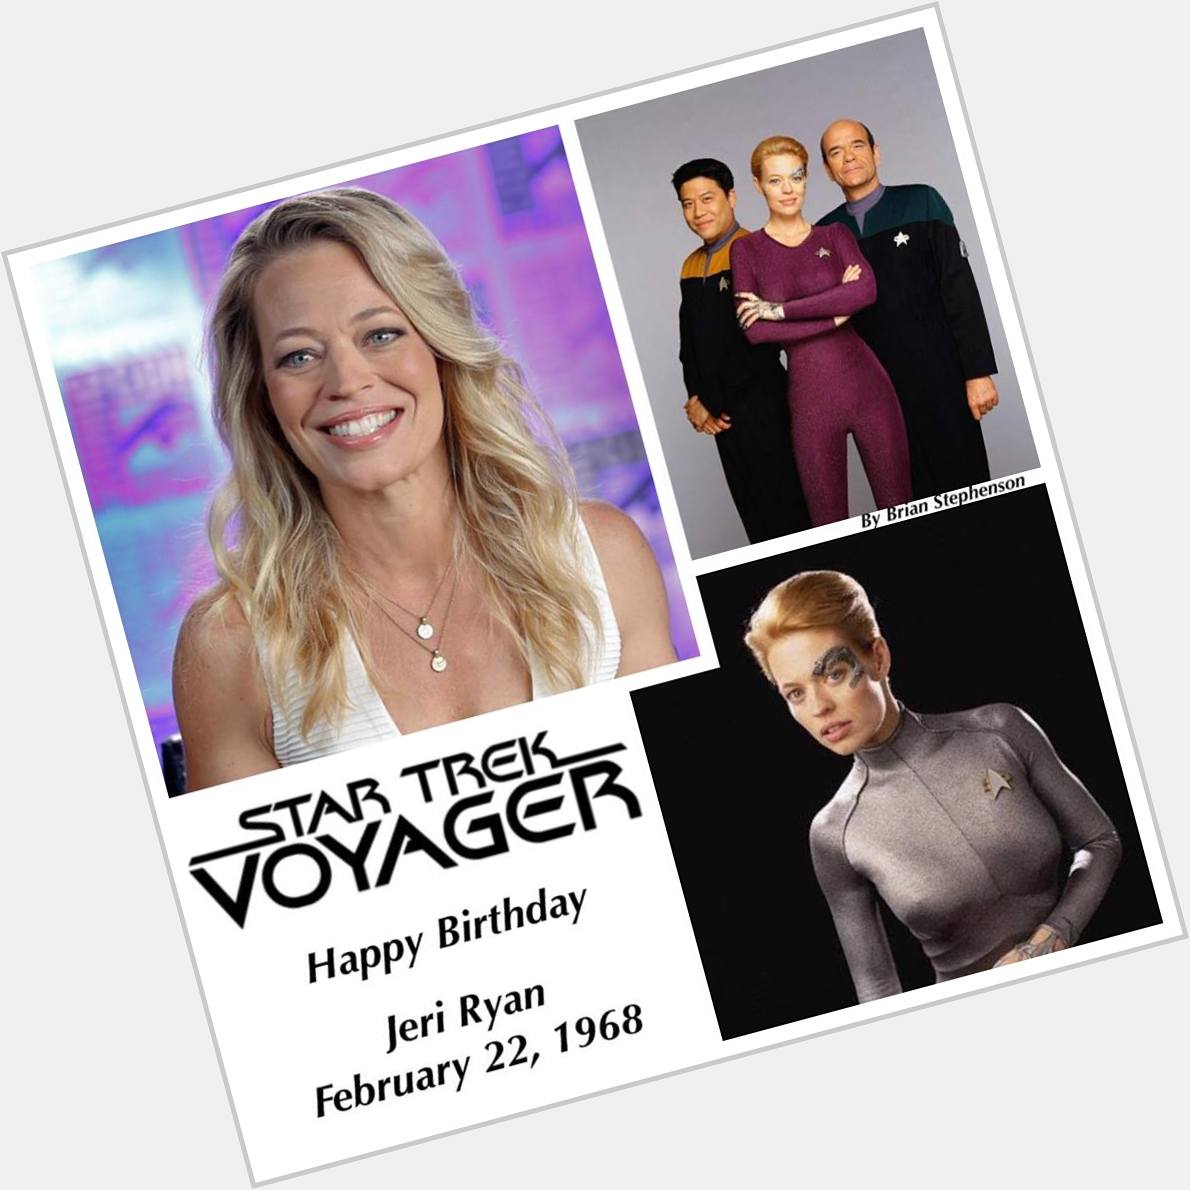 Arizona Artemis would love to wish Star Trek Voyager Alum Jeri Ryan Happy Birthday ! Feb 22 , 1968 